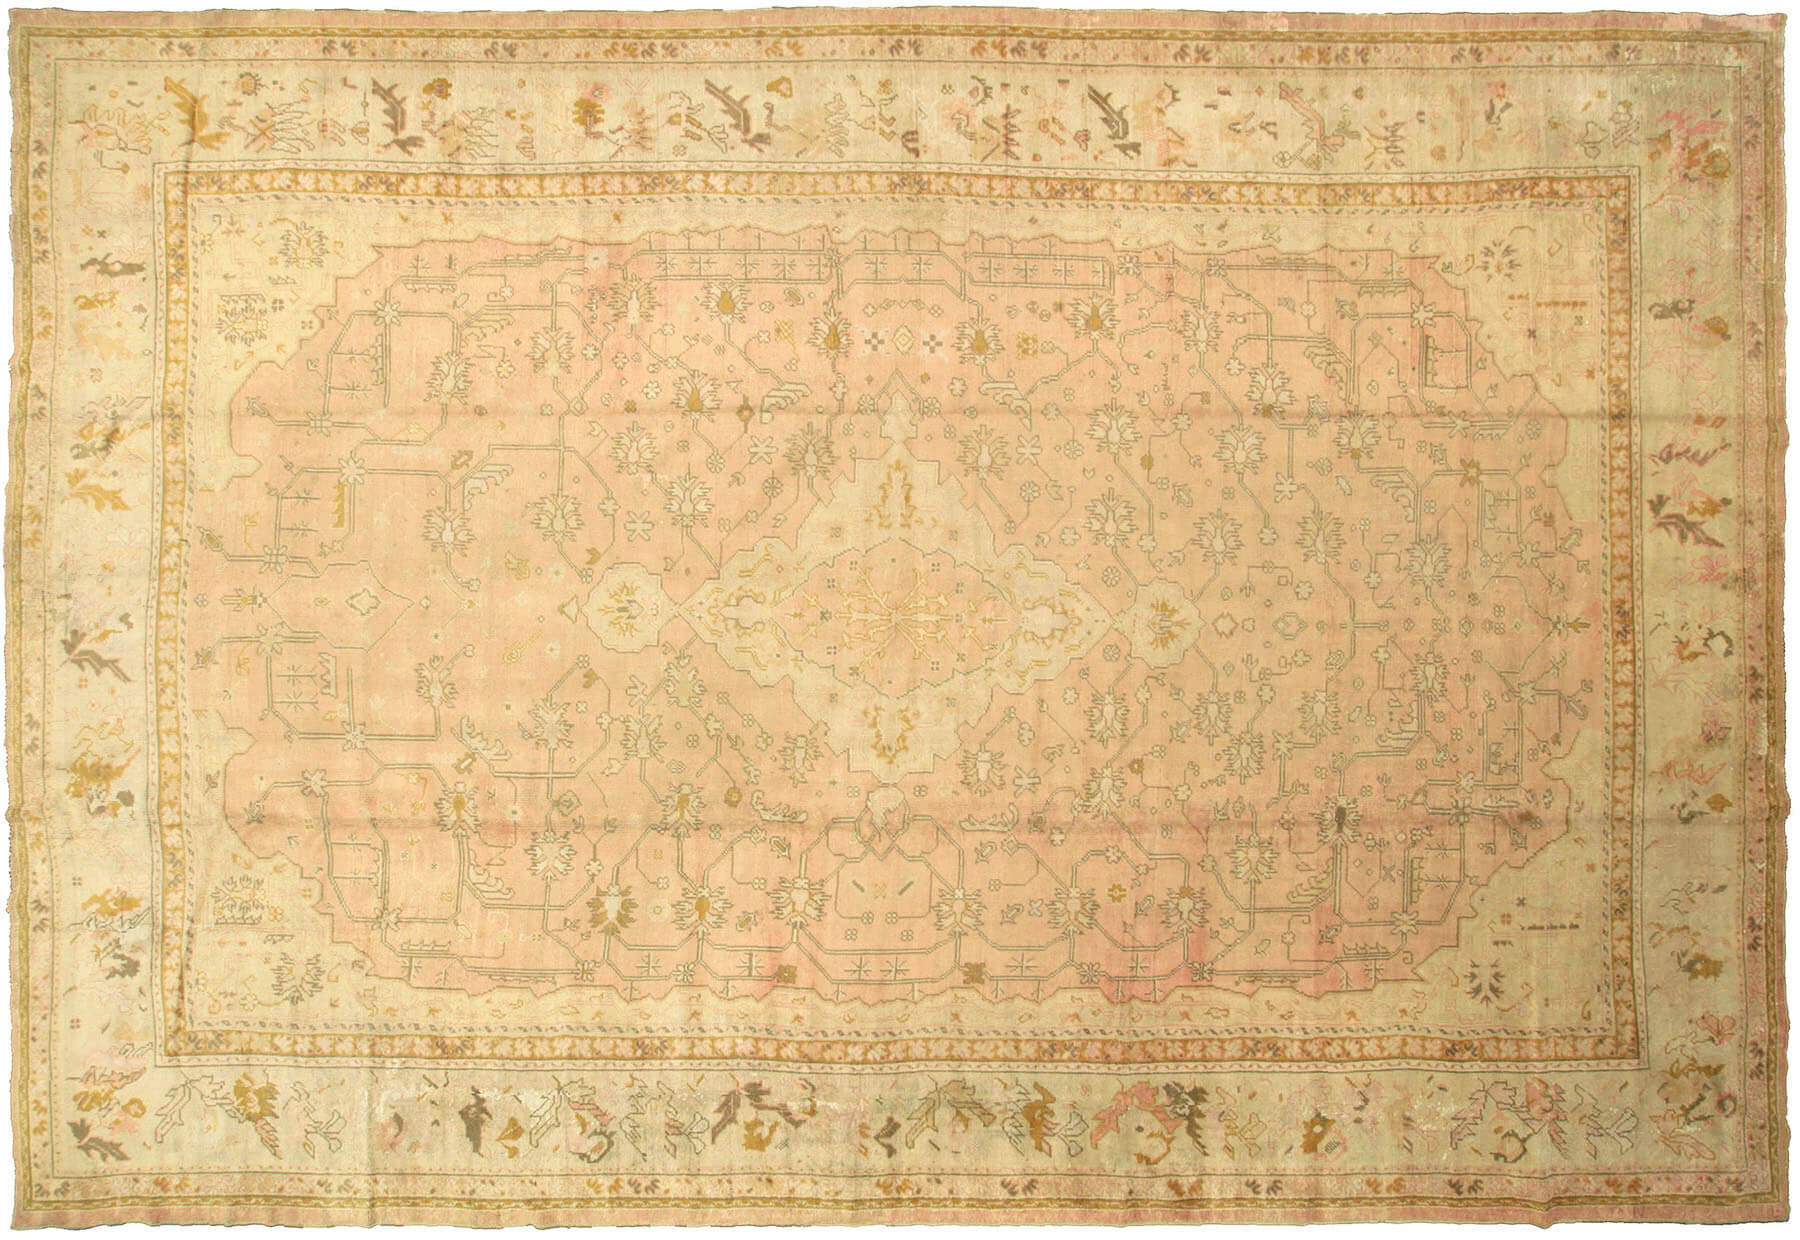 Antique Turkish Oushak Carpet - 13'5" x 19'7"